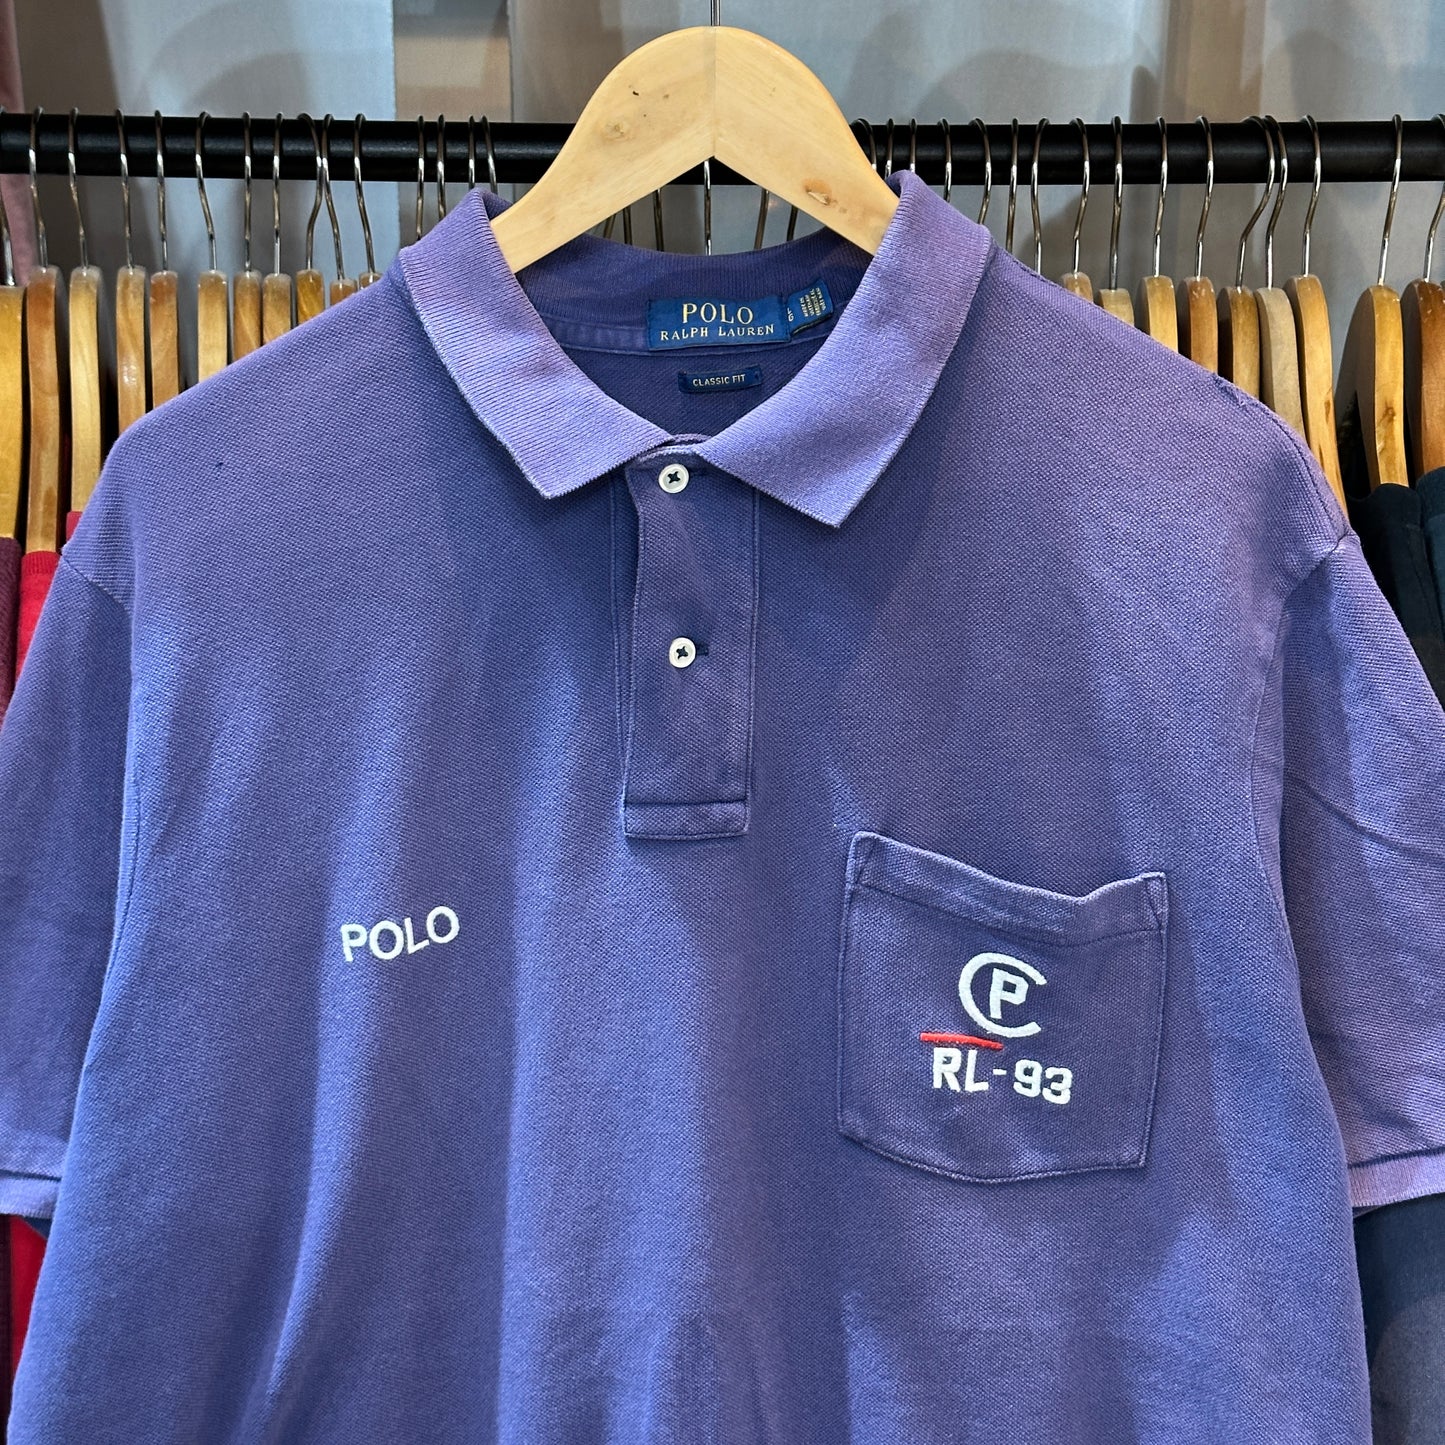 Polo by Ralph Lauren RL-63 00's Navy Polo shirt